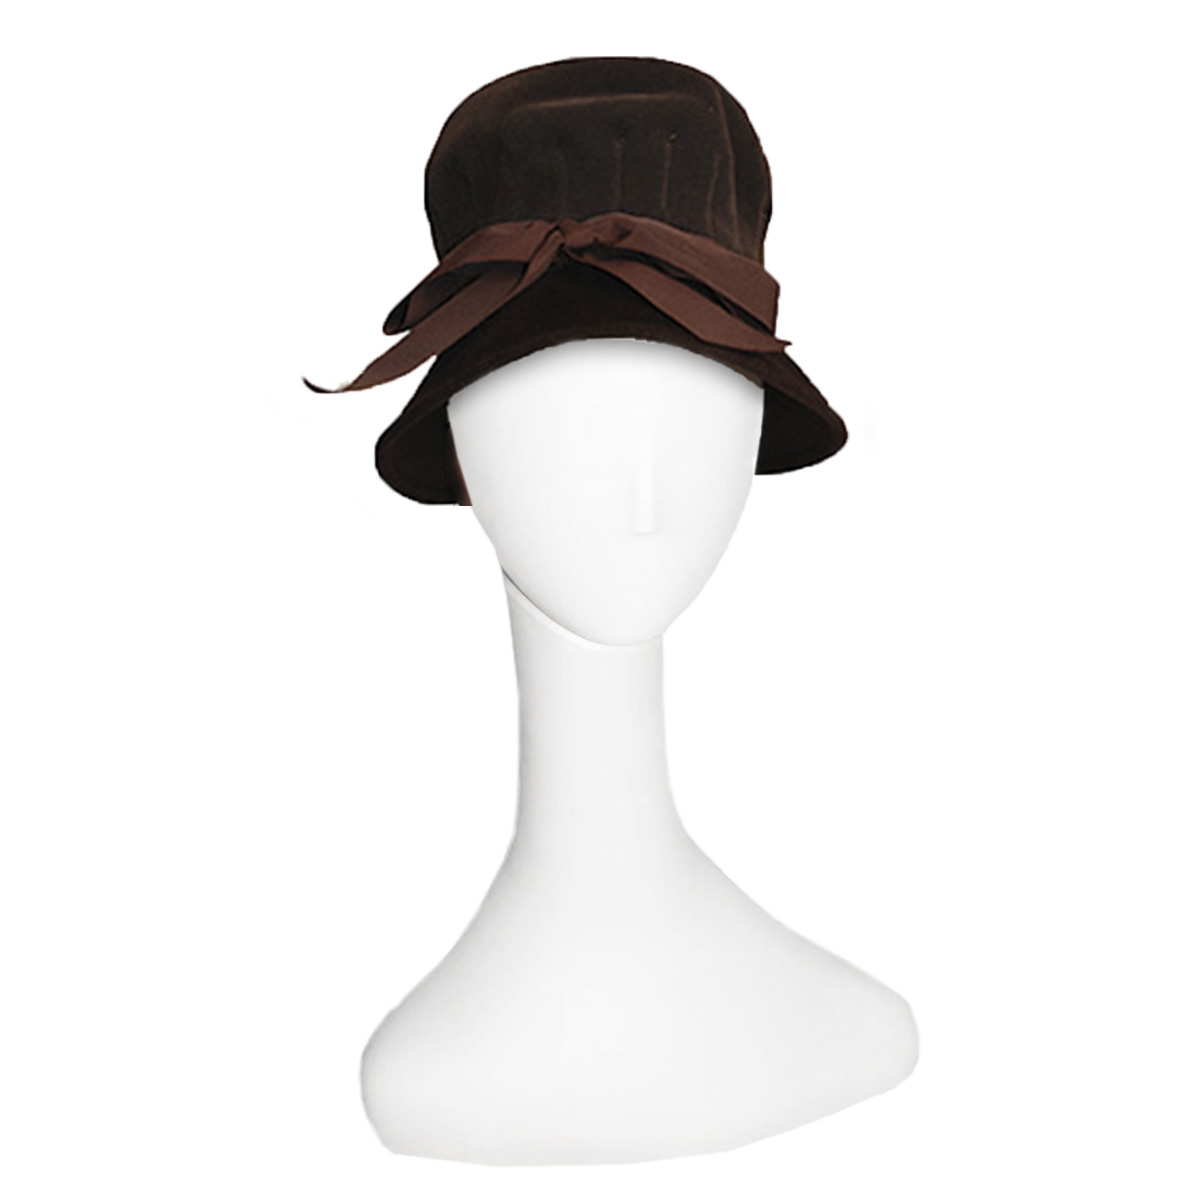 1940s tall hat